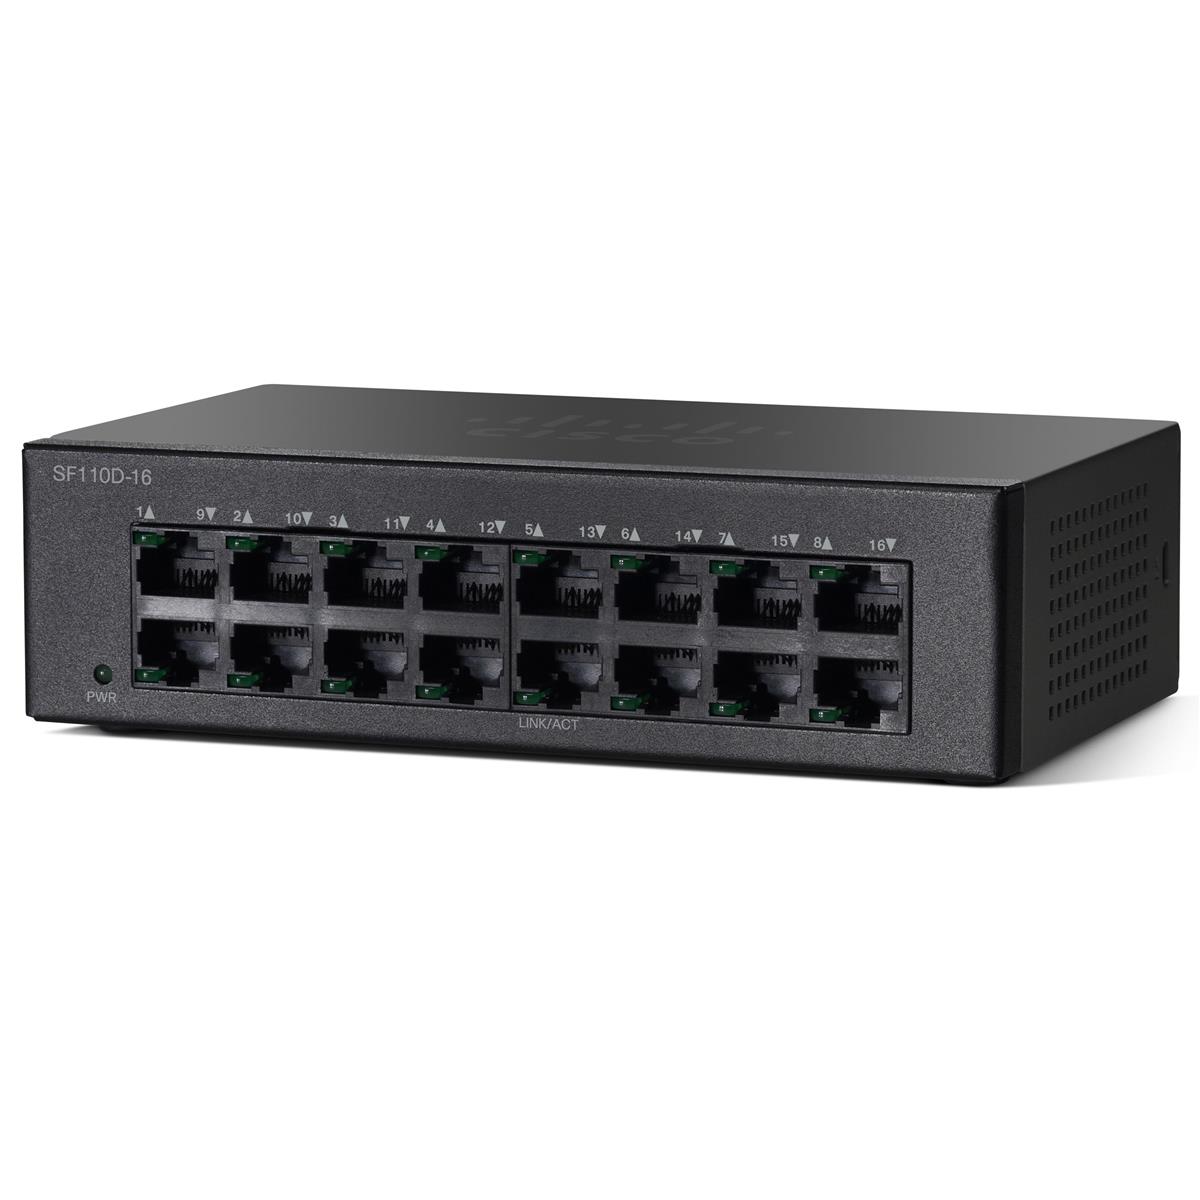 Image of Cisco SF110D-16 16-Port 10/100 Desktop Unmanaged Switch